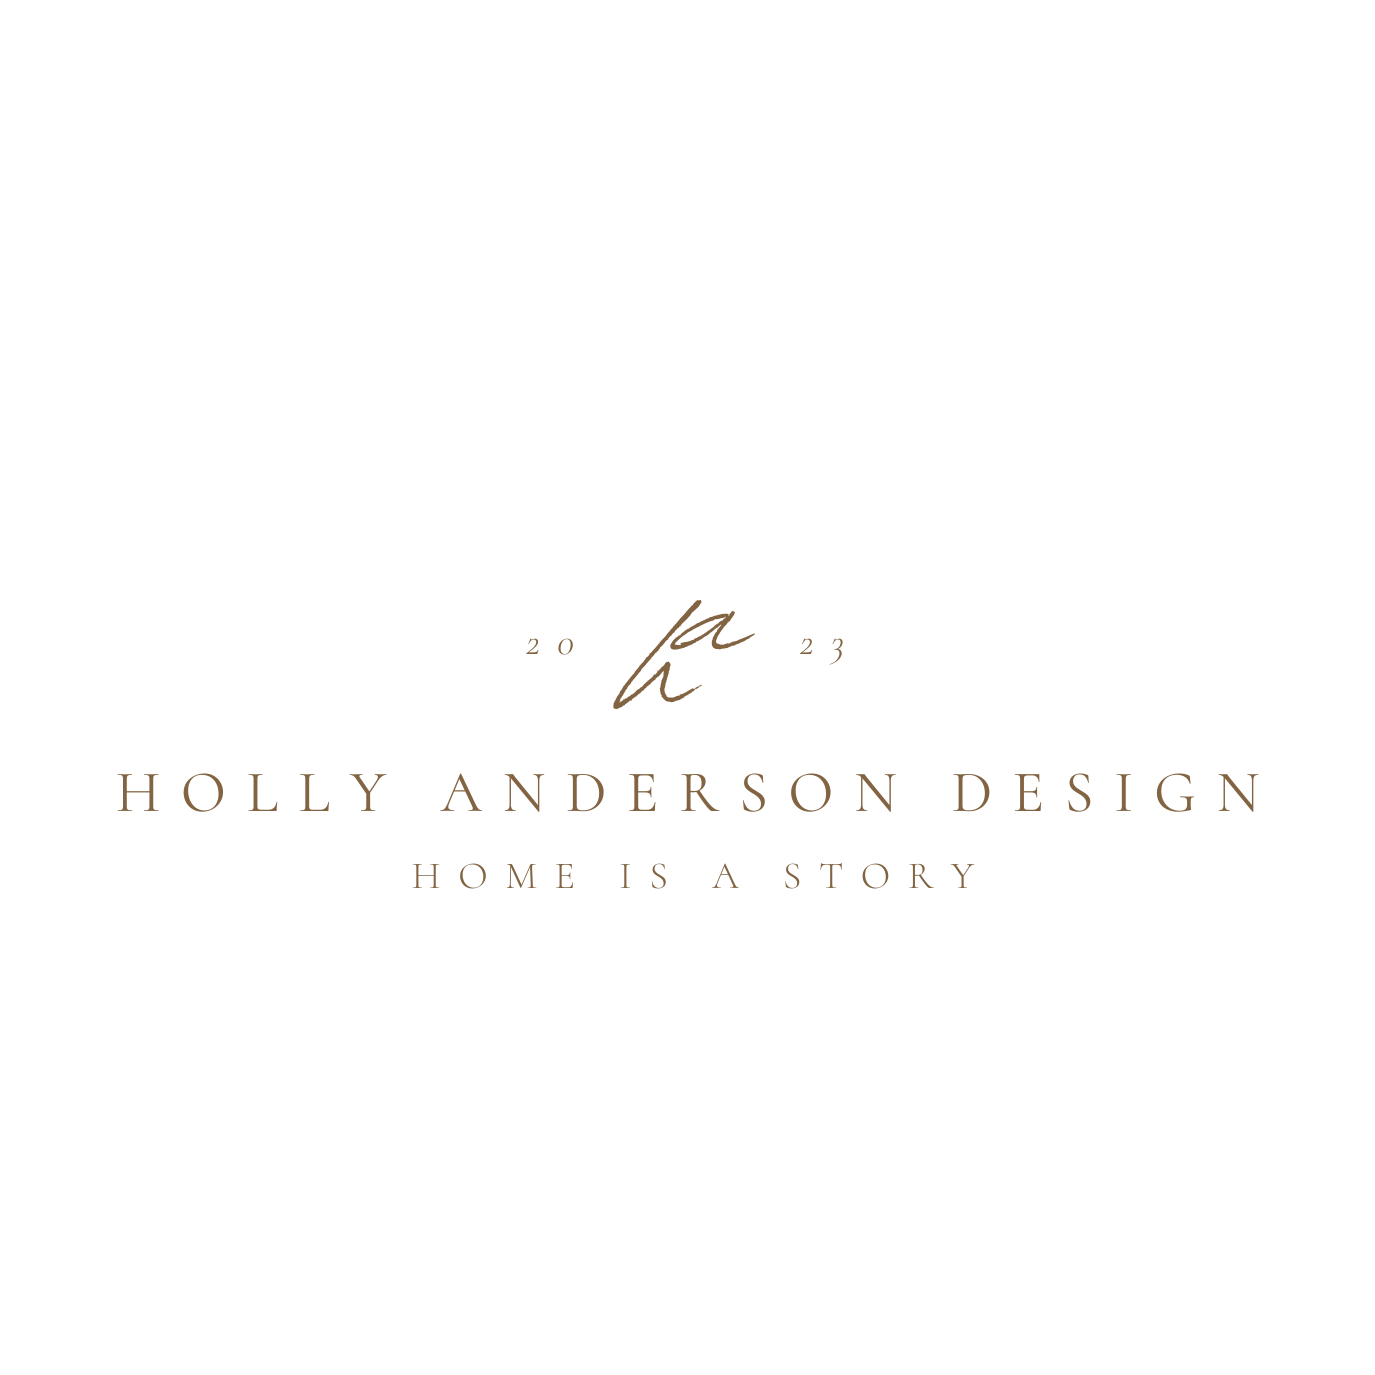 Holly Anderson Design